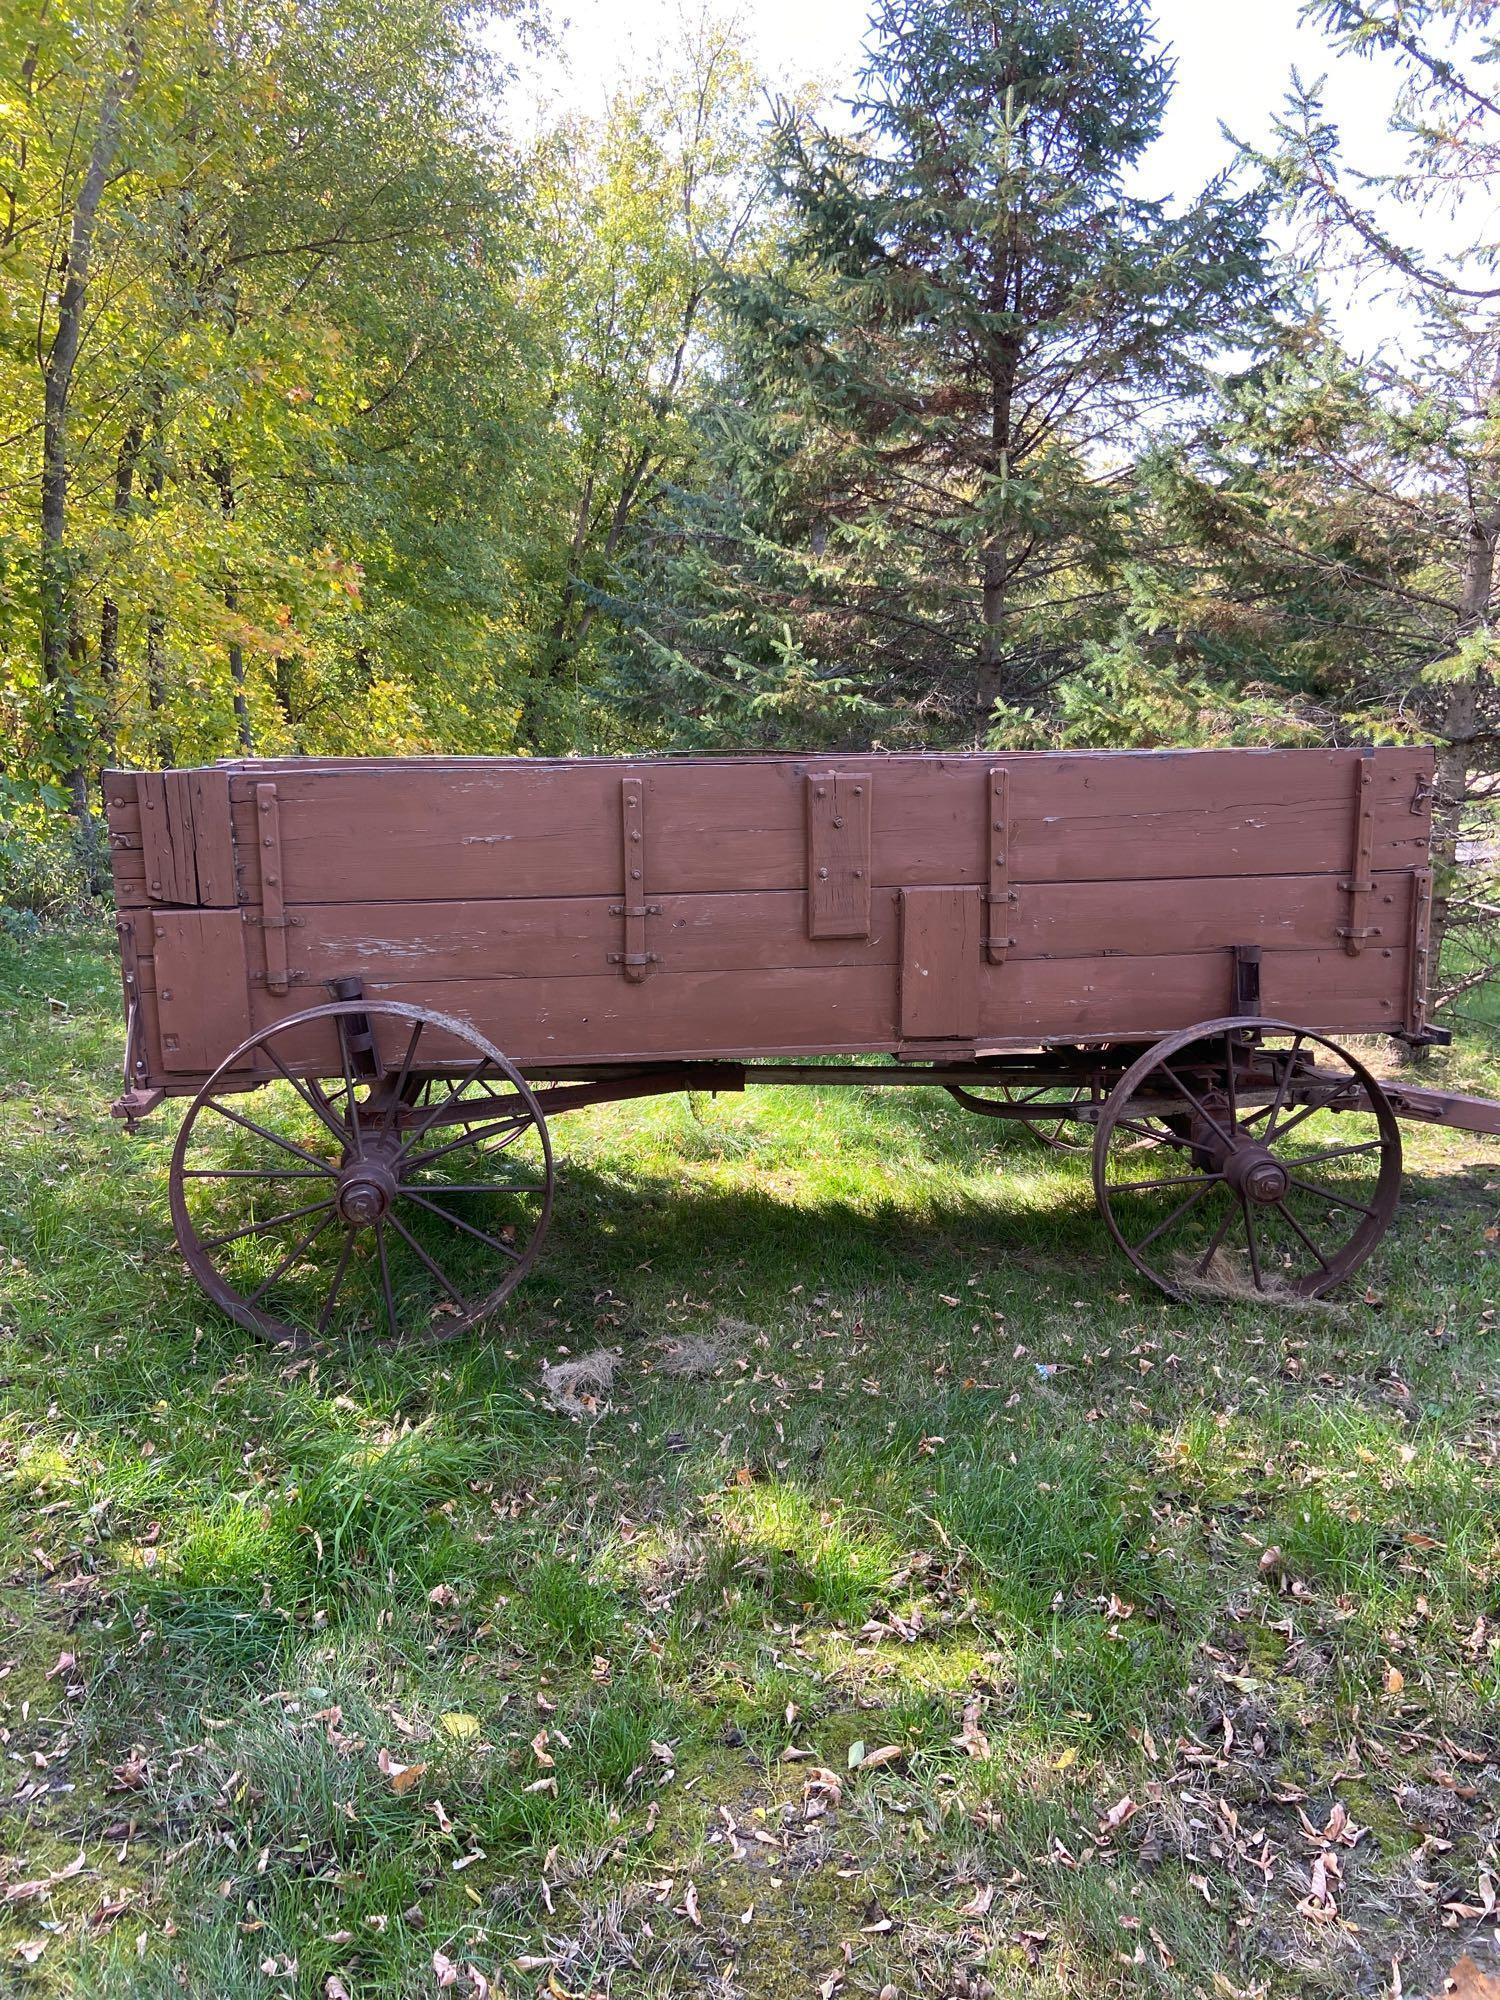 Hitch wagon